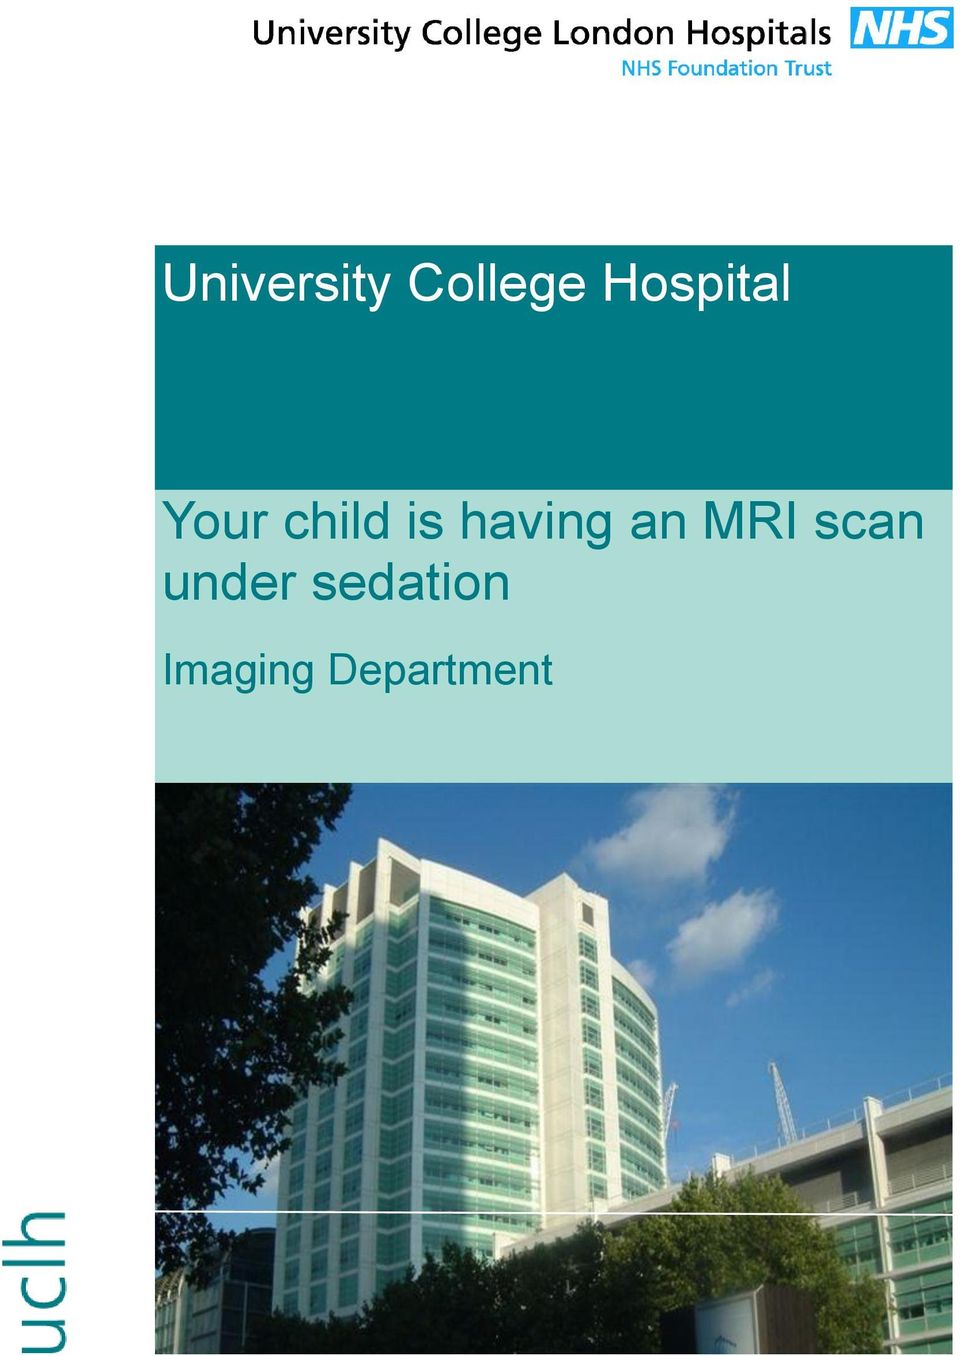 having an MRI scan